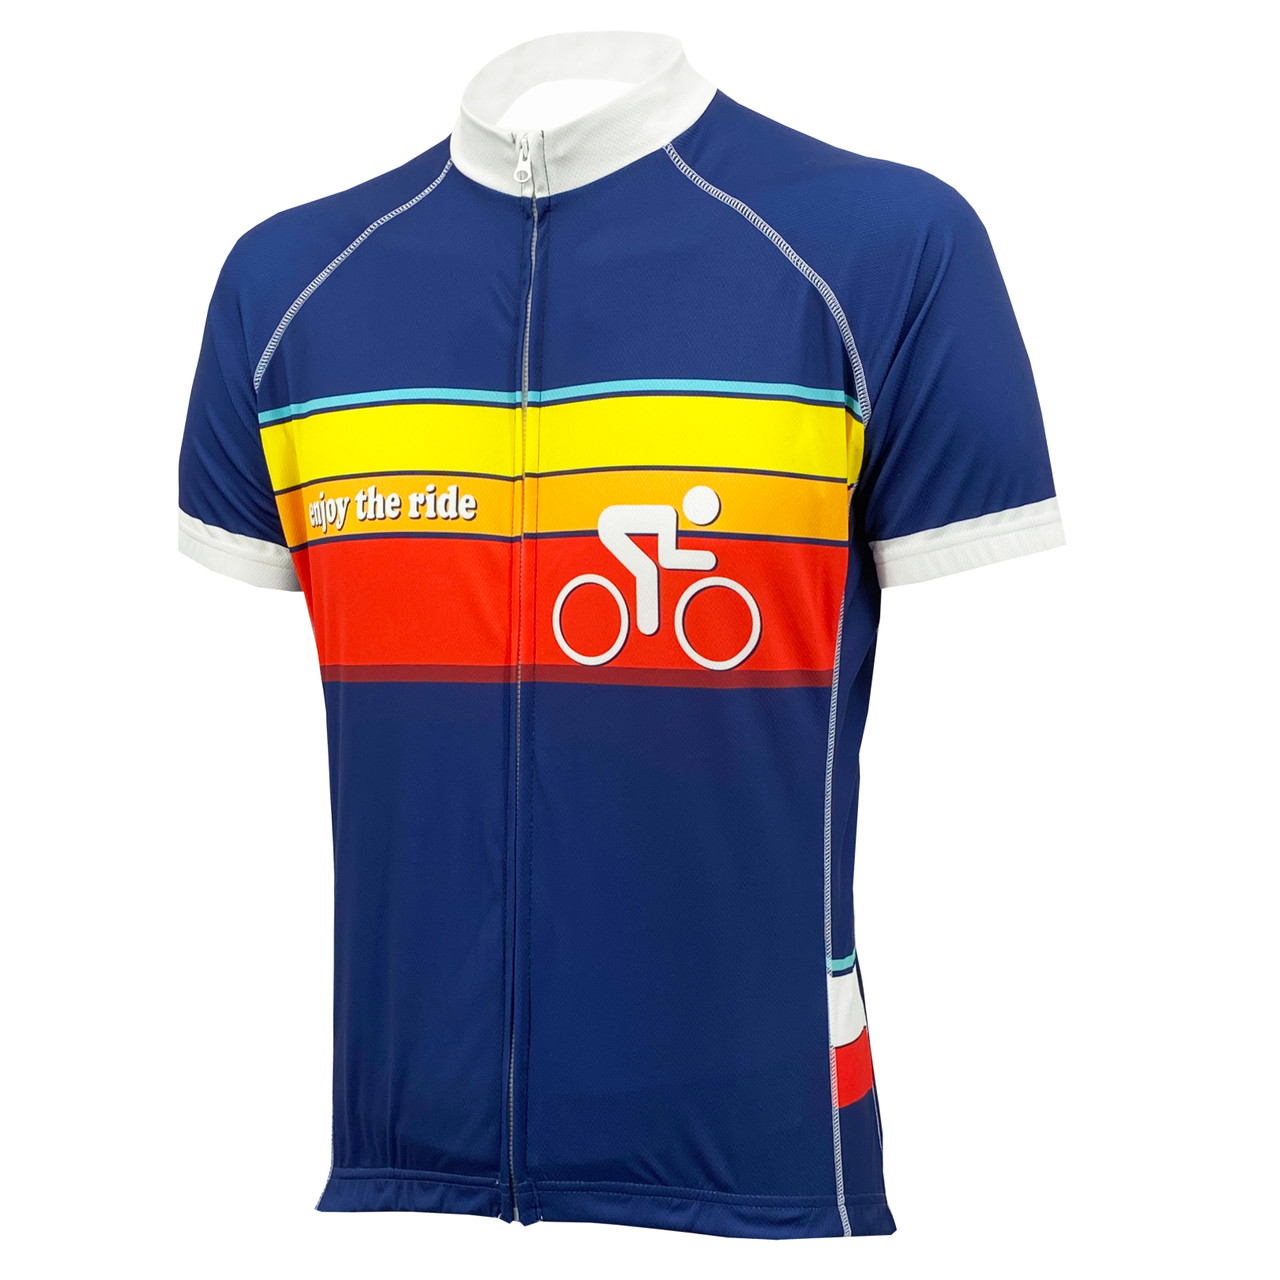 Enjoy The Ride Men's Cycling Jersey - Blue